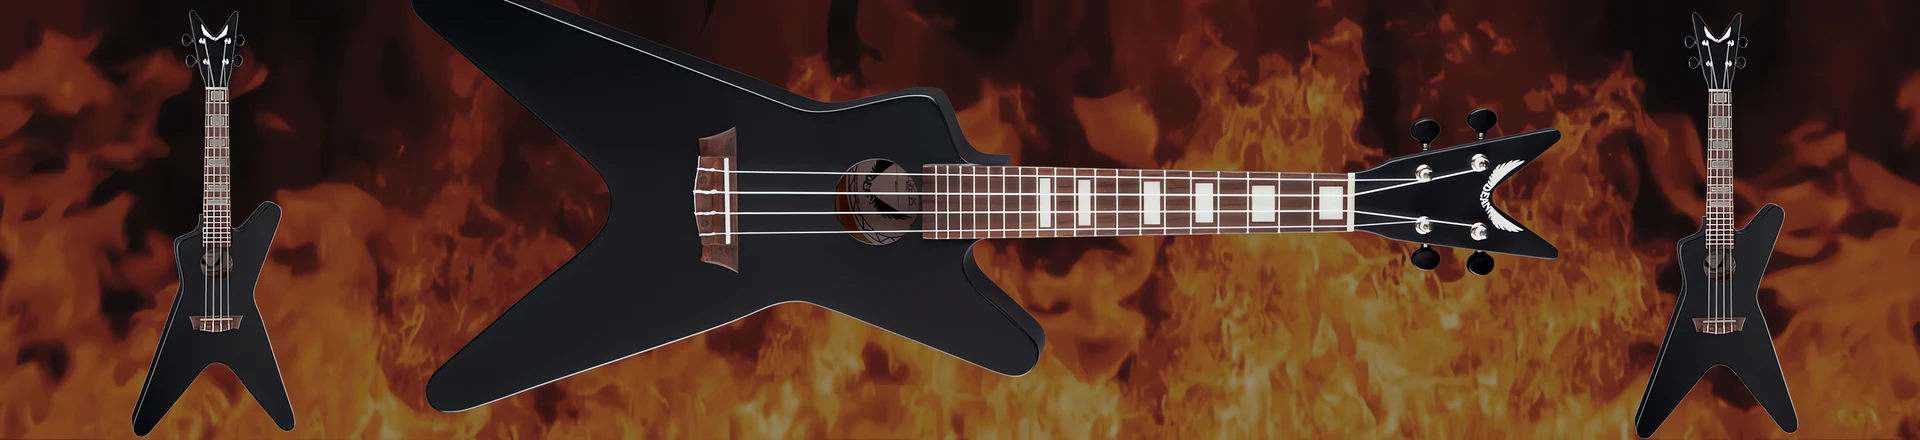 Dean ML BKS - ukulele from hell!